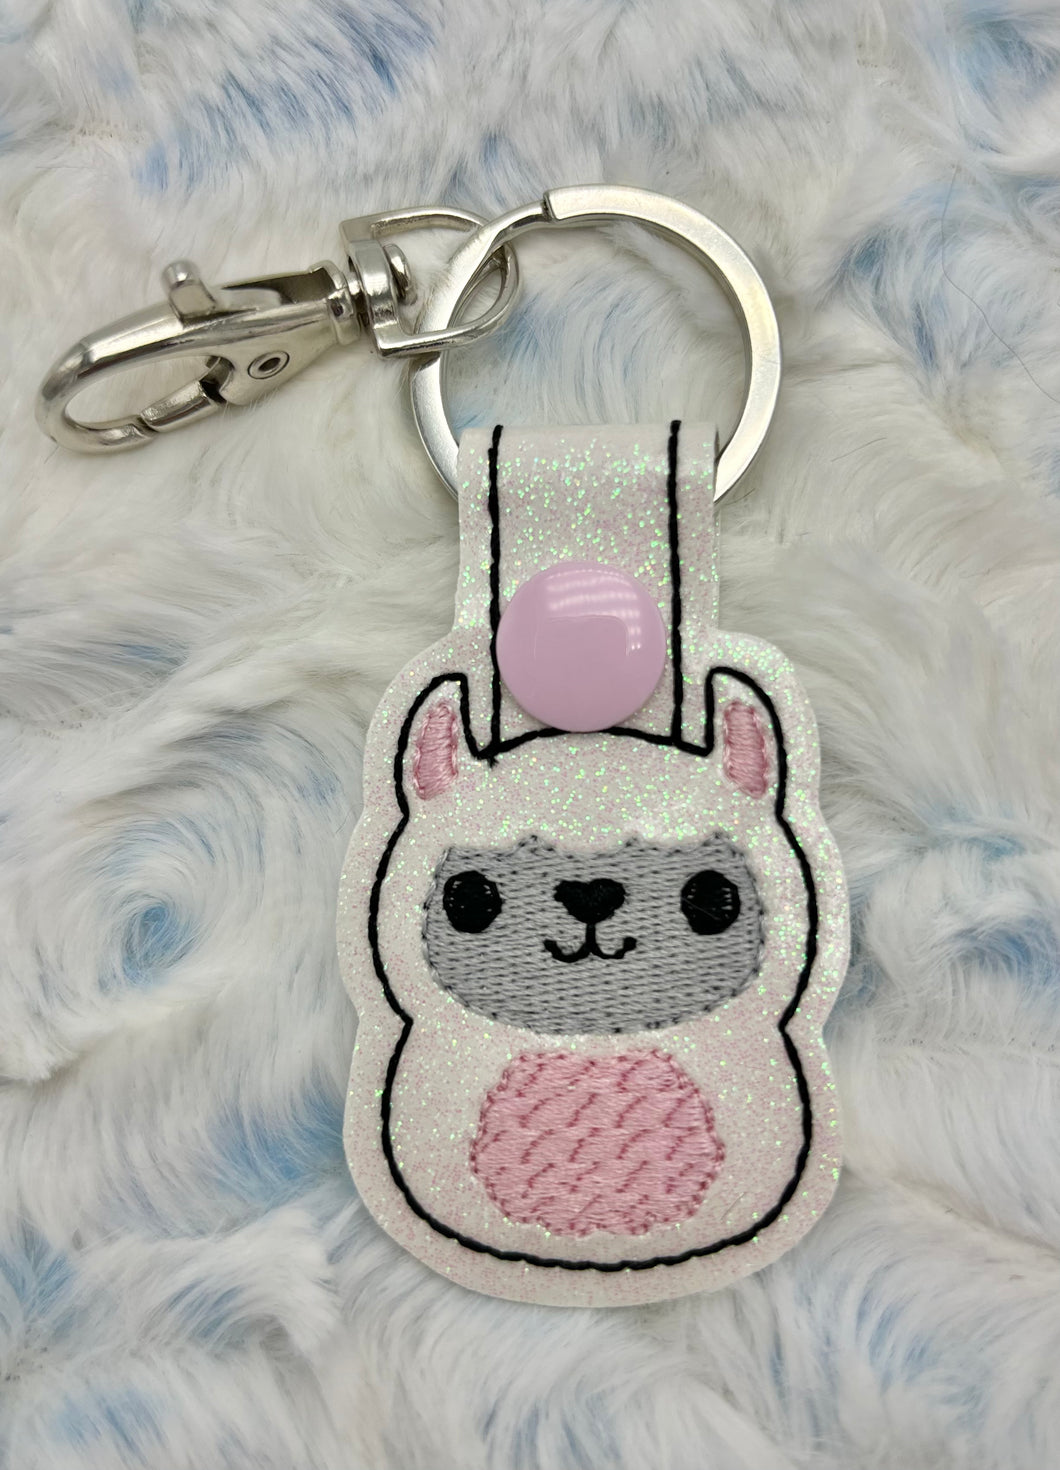 Little Llama Keychain